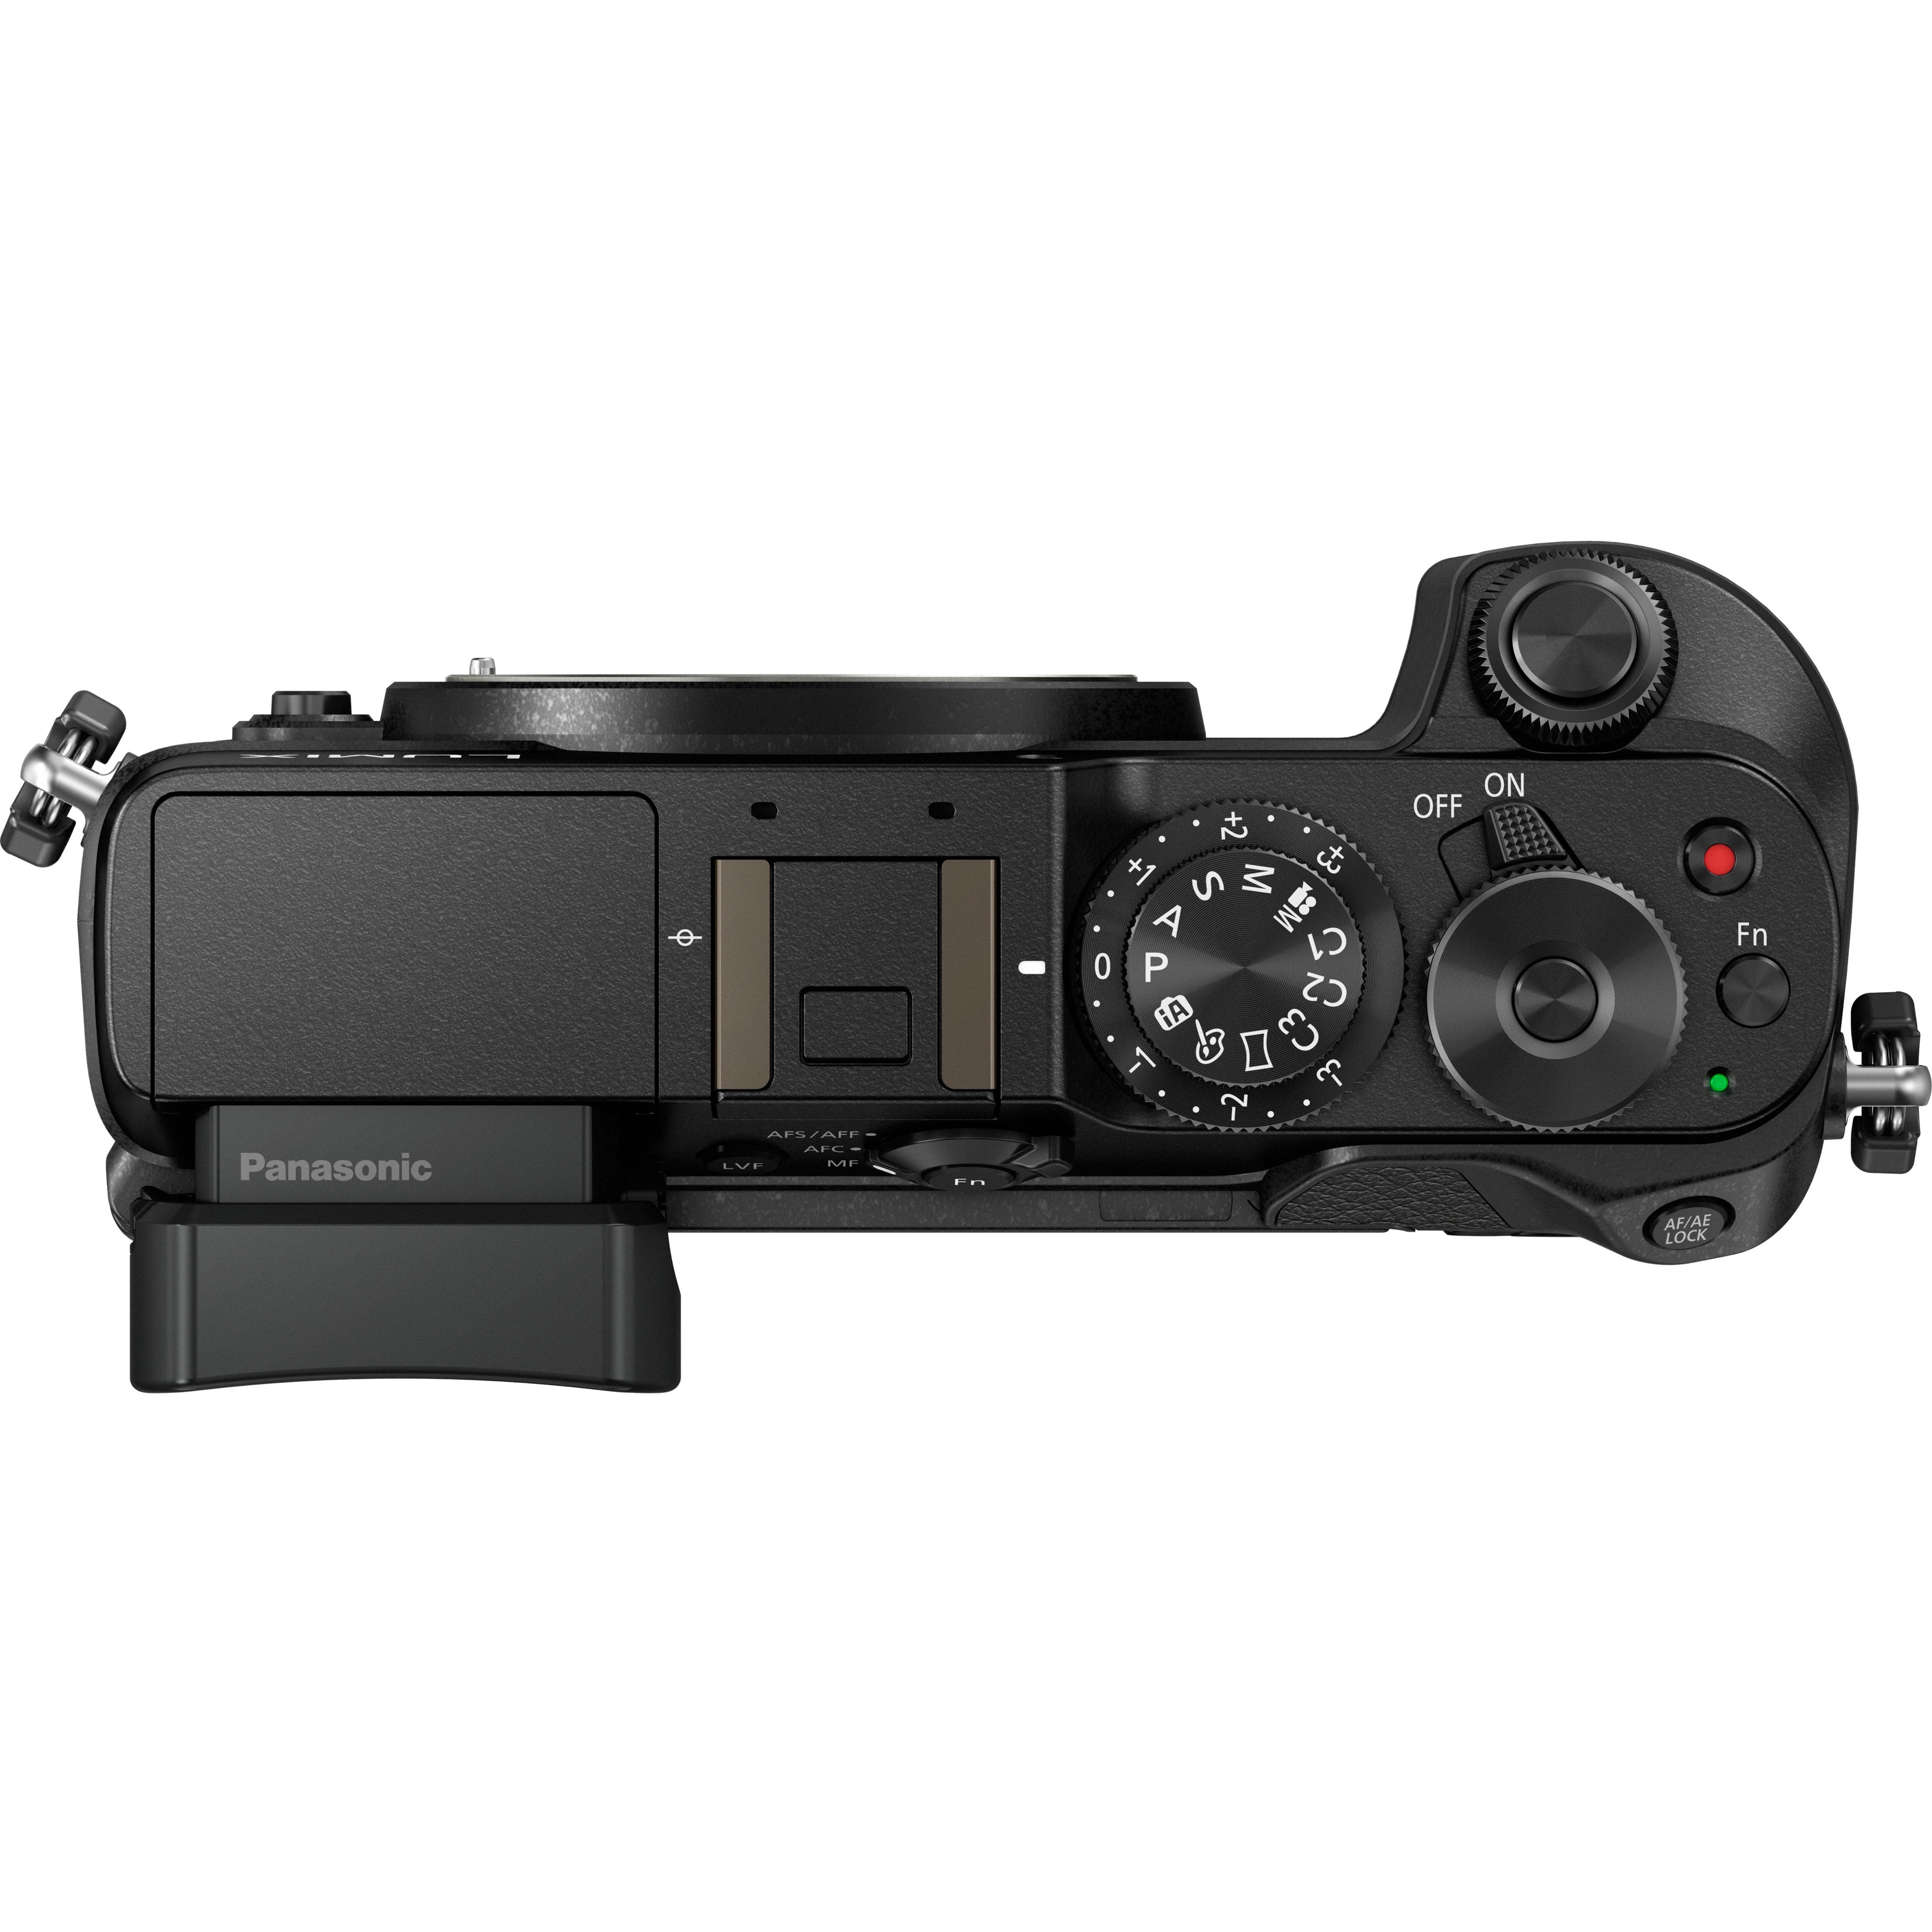 Panasonic Lumix GX8 20.3 Megapixel Mirrorless Camera Body Only, Black - image 4 of 4